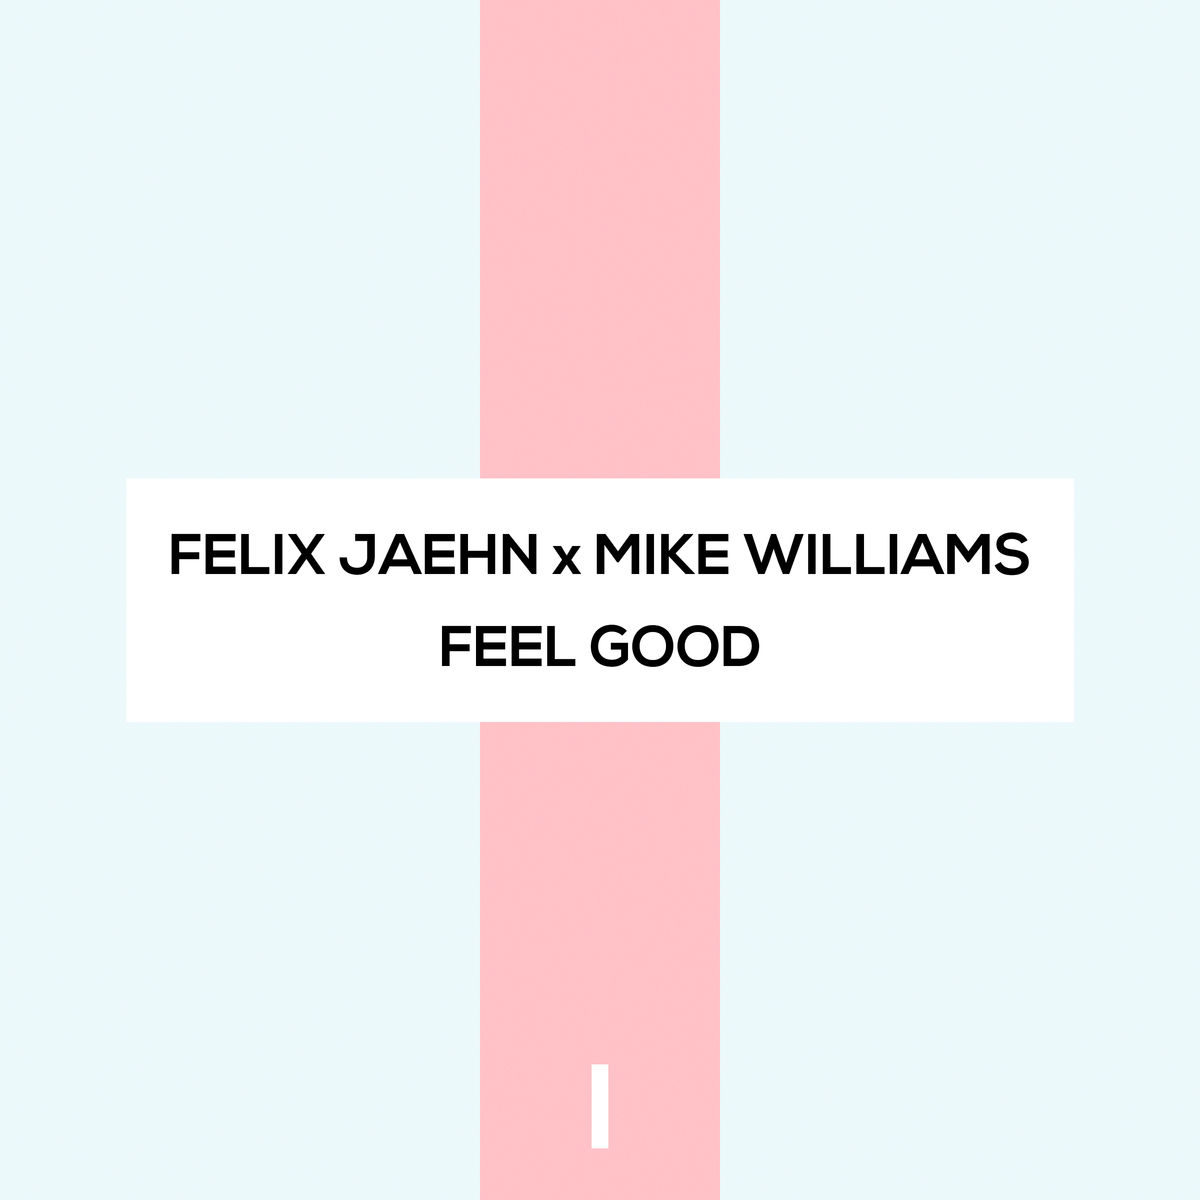 Feel Good - Felix Jaehn, Mike Williams